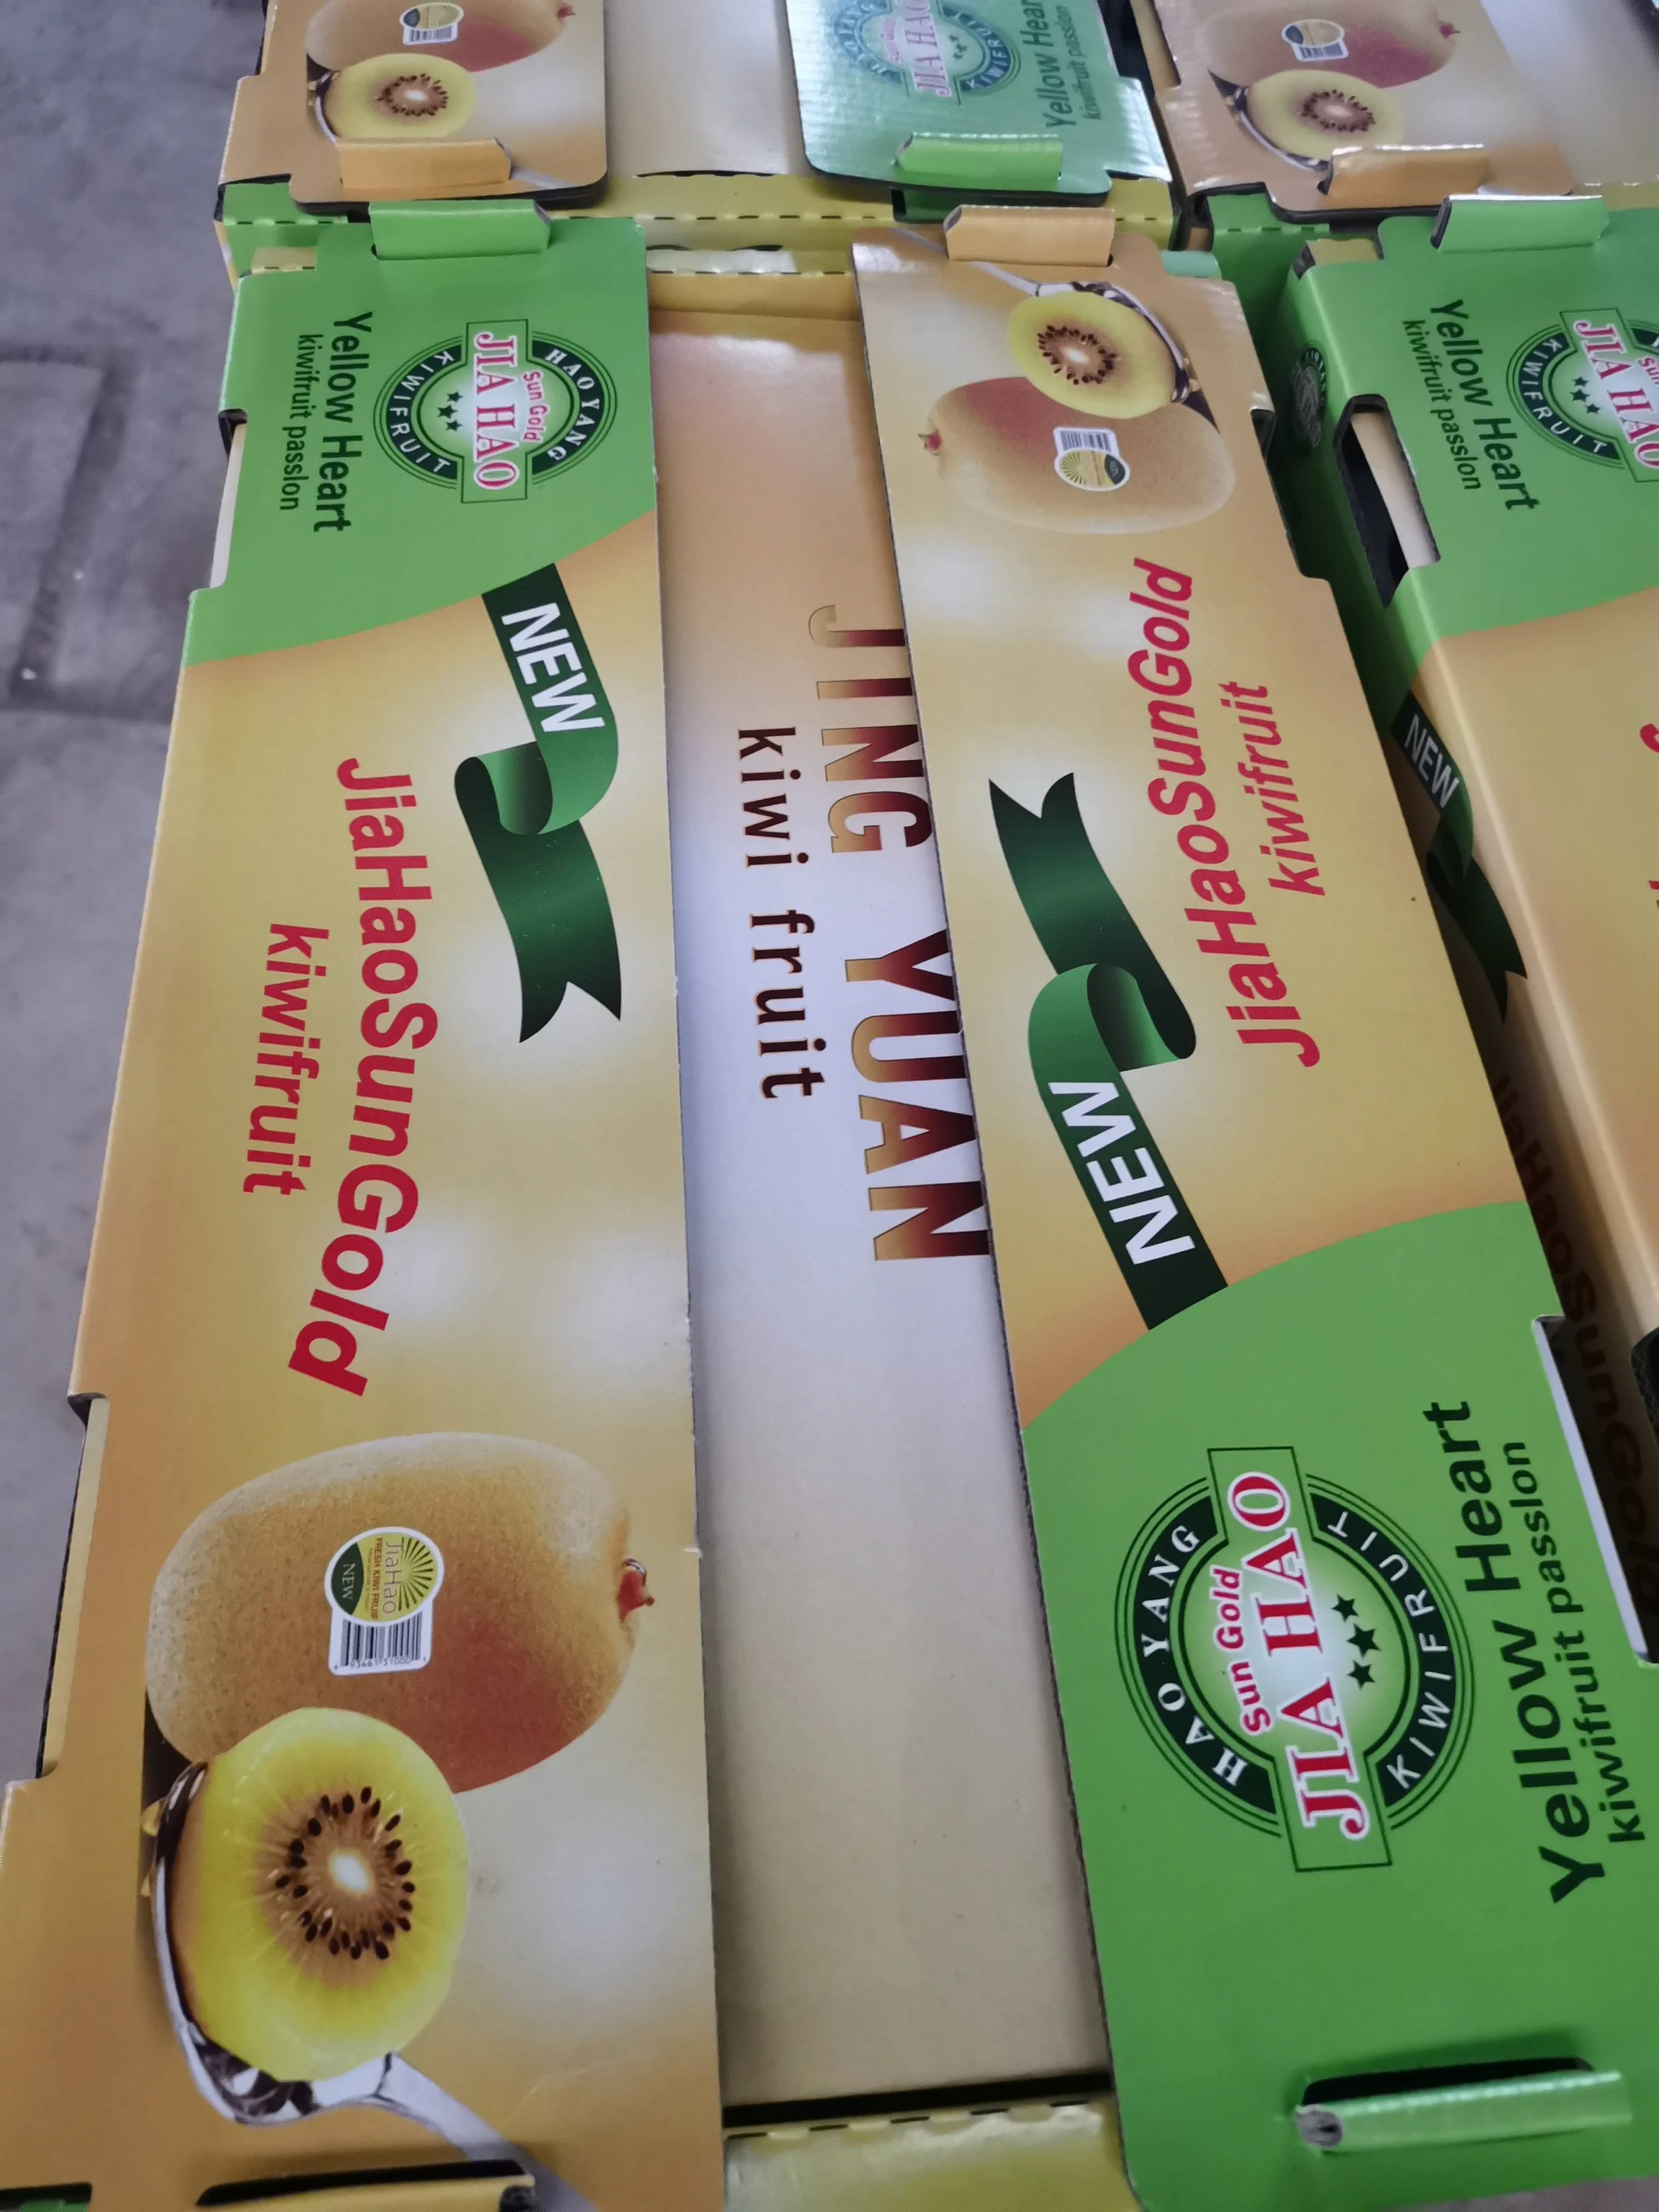 2021 wholesale gold Top Grade fresh kiwi fruit